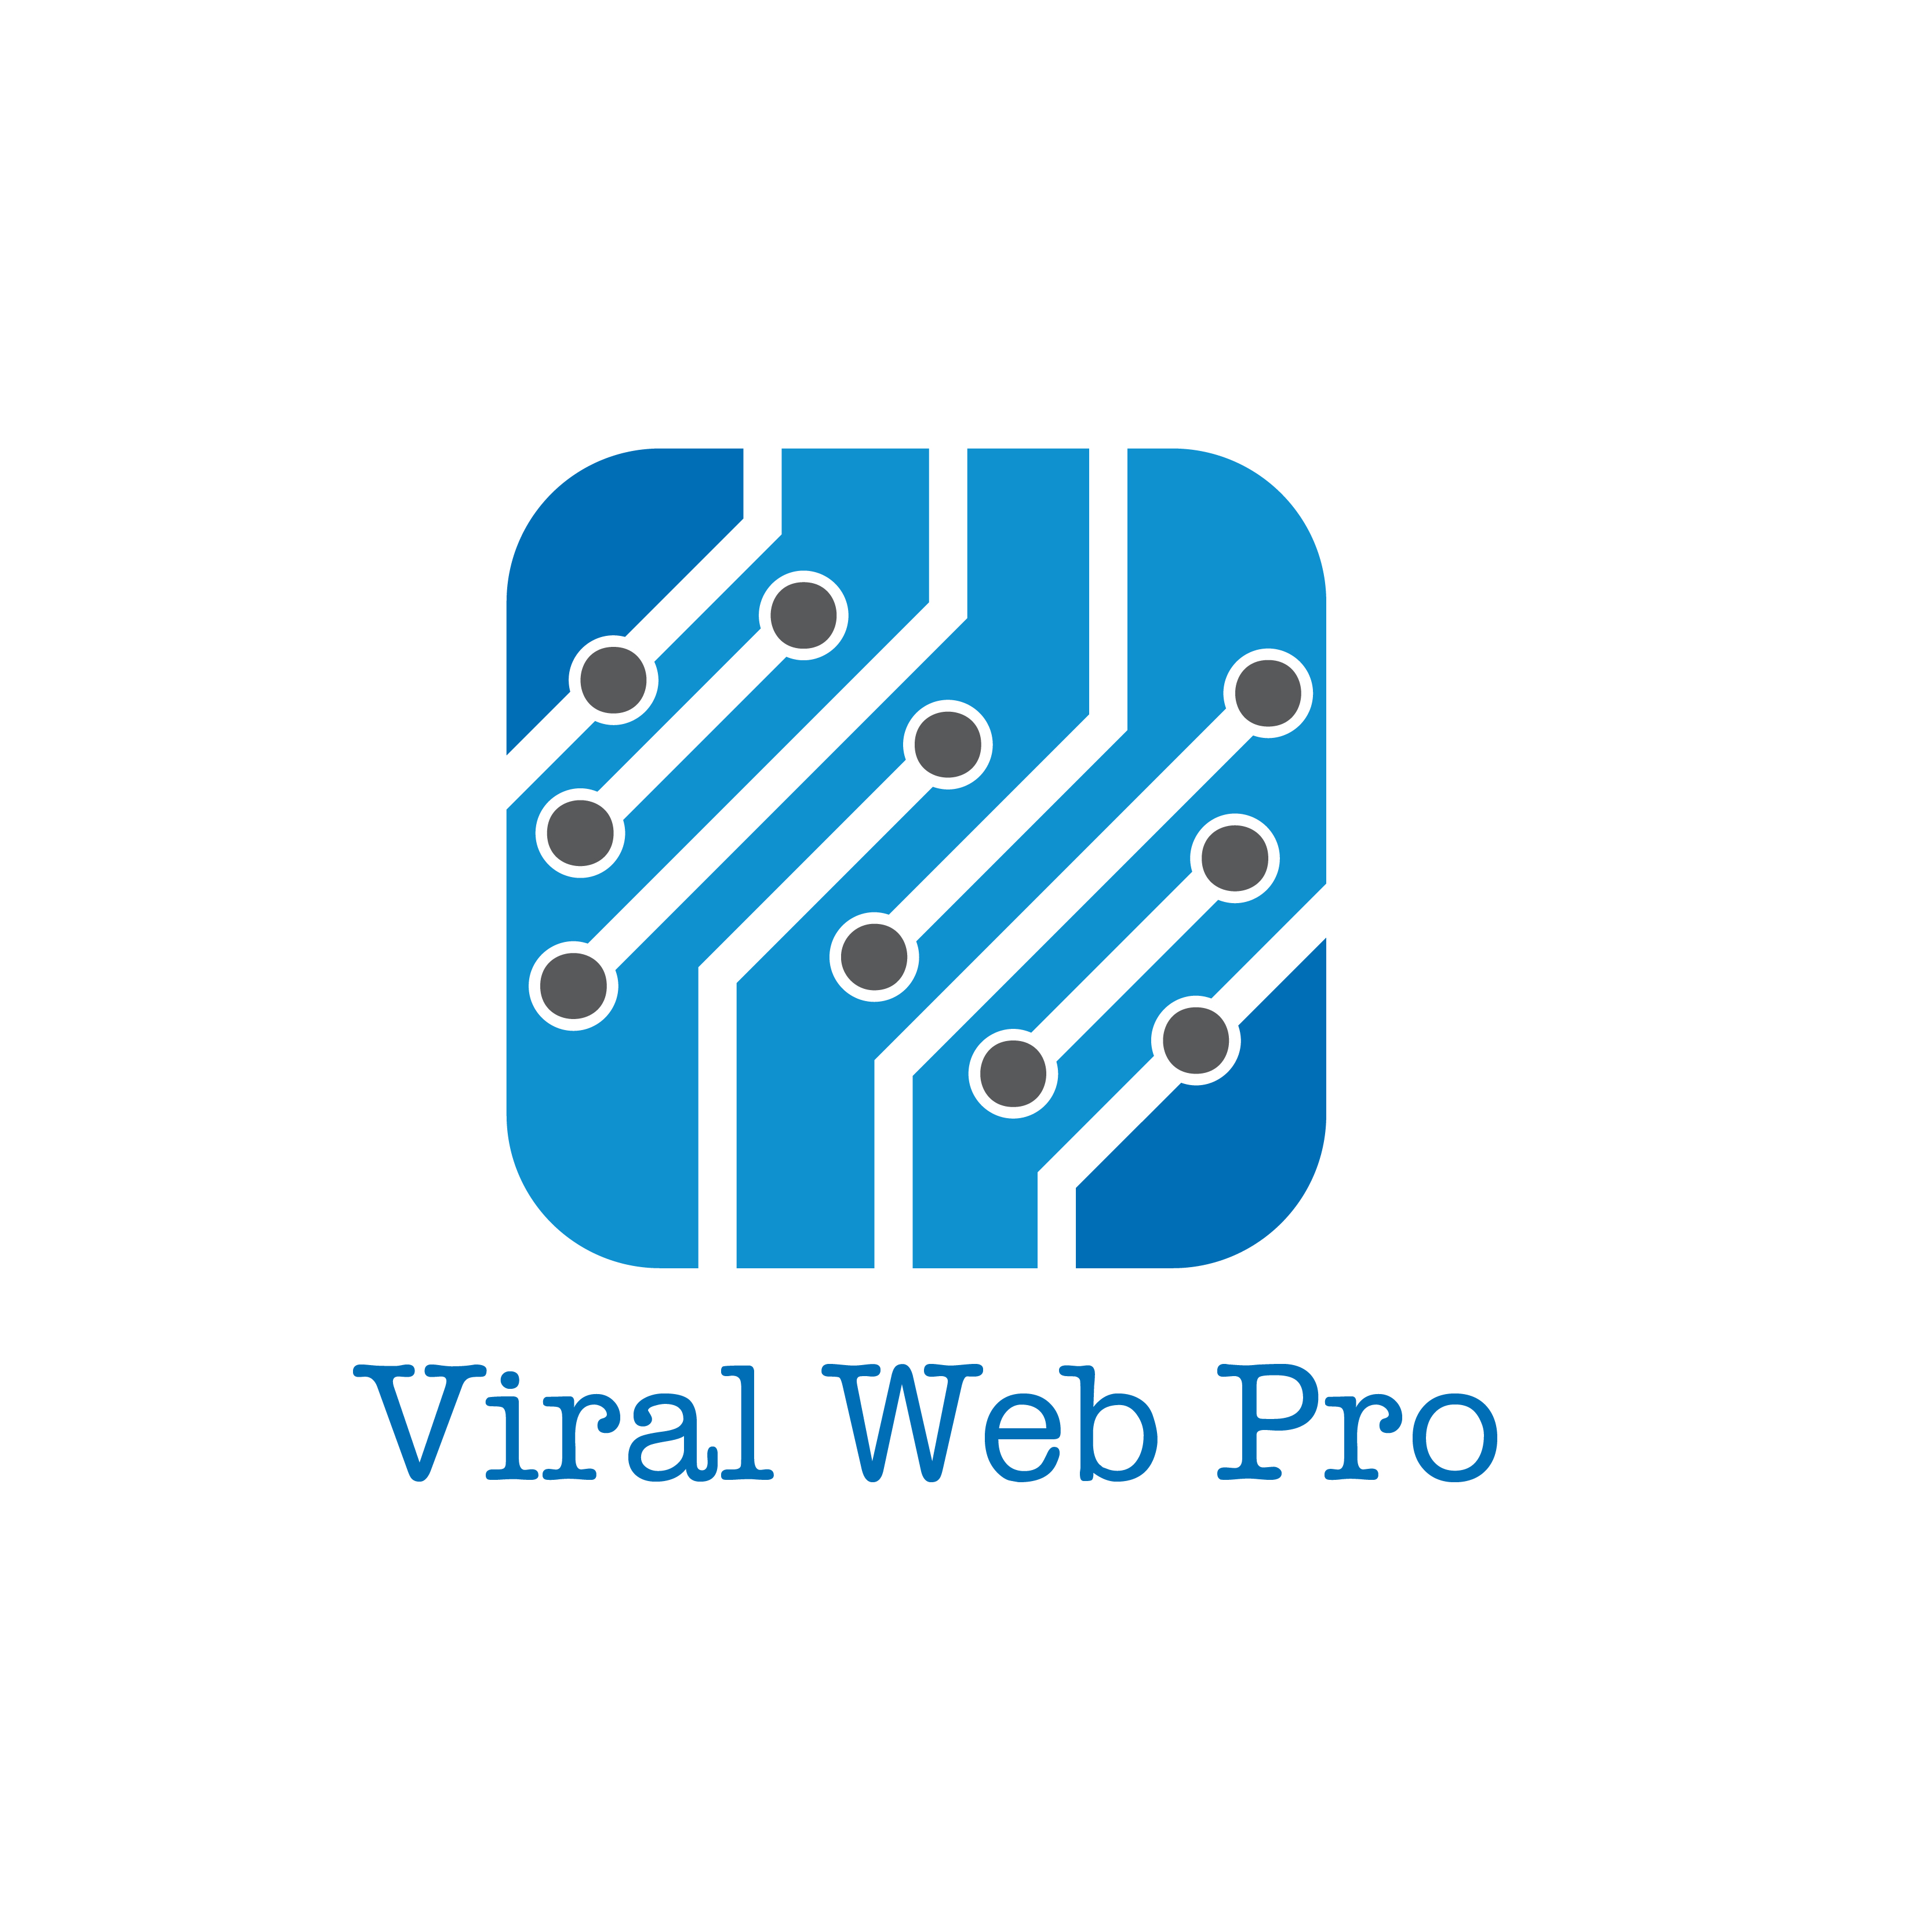 Viral Web Pro